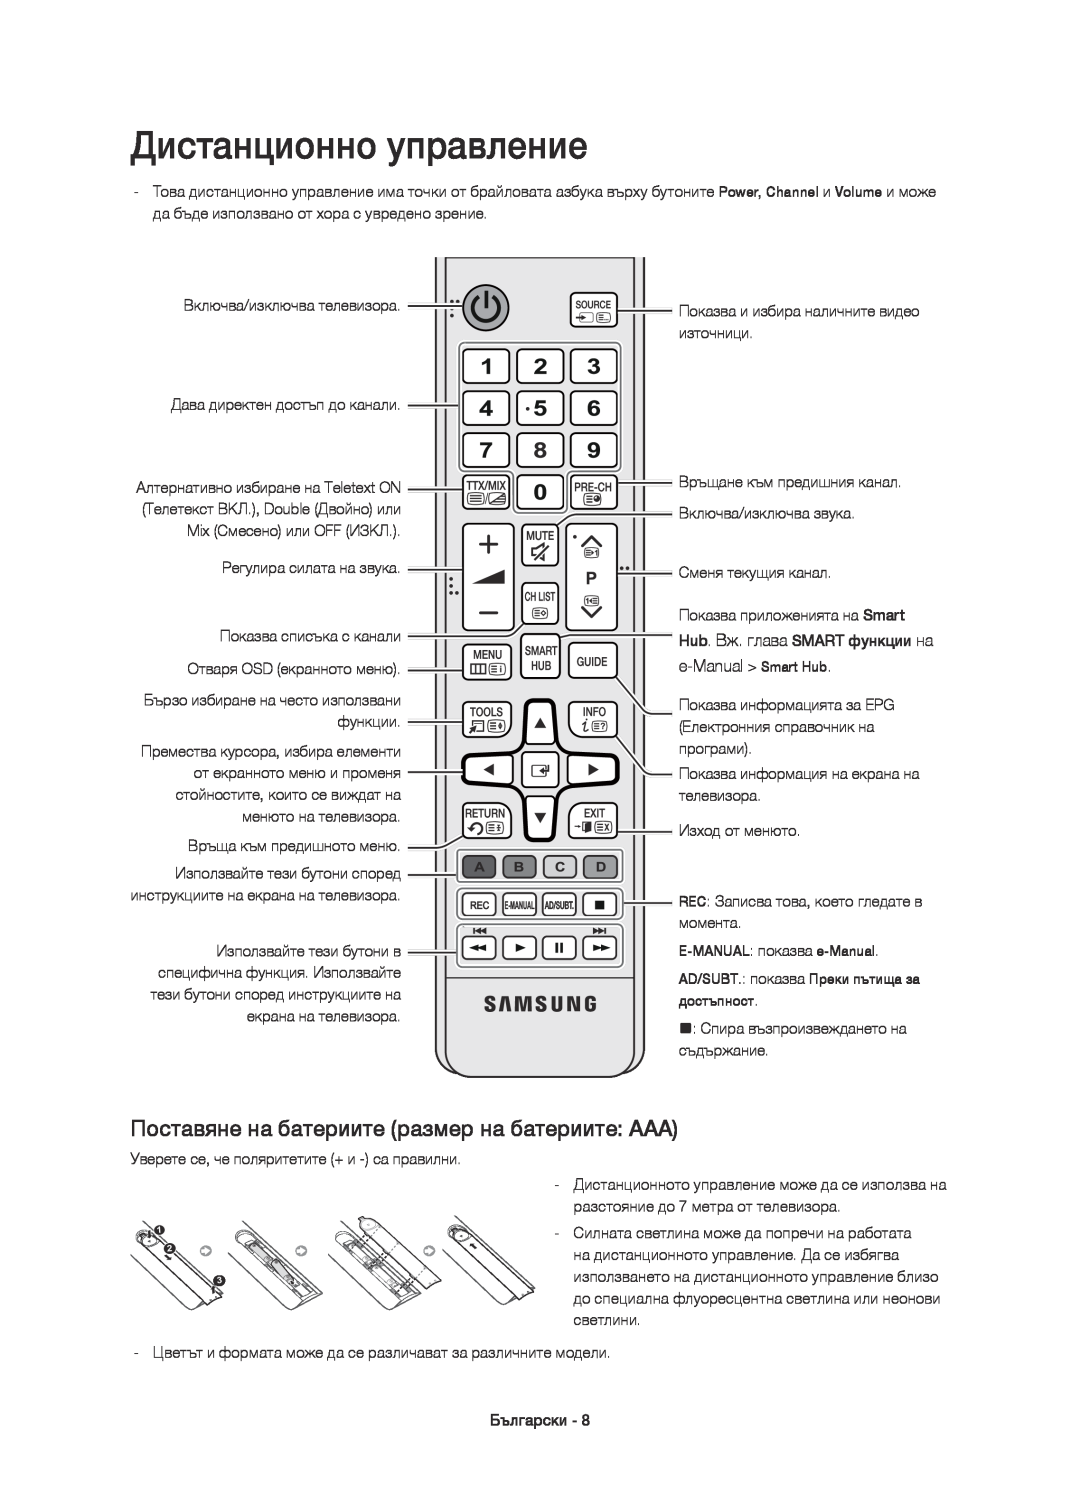 Samsung UE48H6650SLXXH manual Дистанционно управление, Поставяне на батериите размер на батериите AAA, e-Manual Smart Hub 